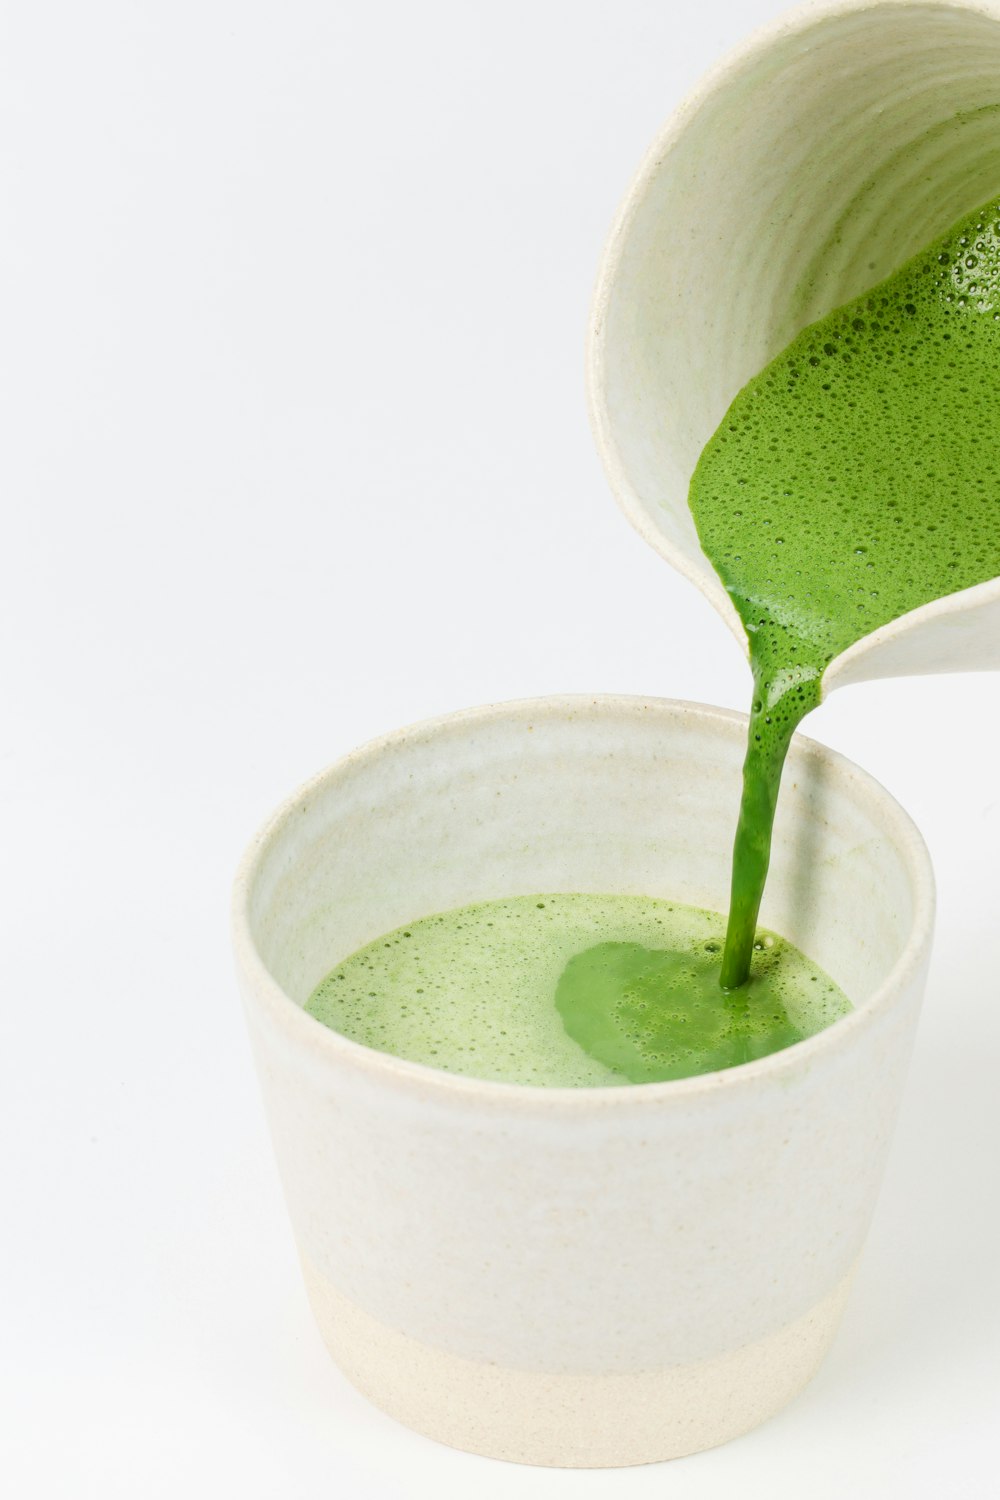 green liquid in white ceramic cup